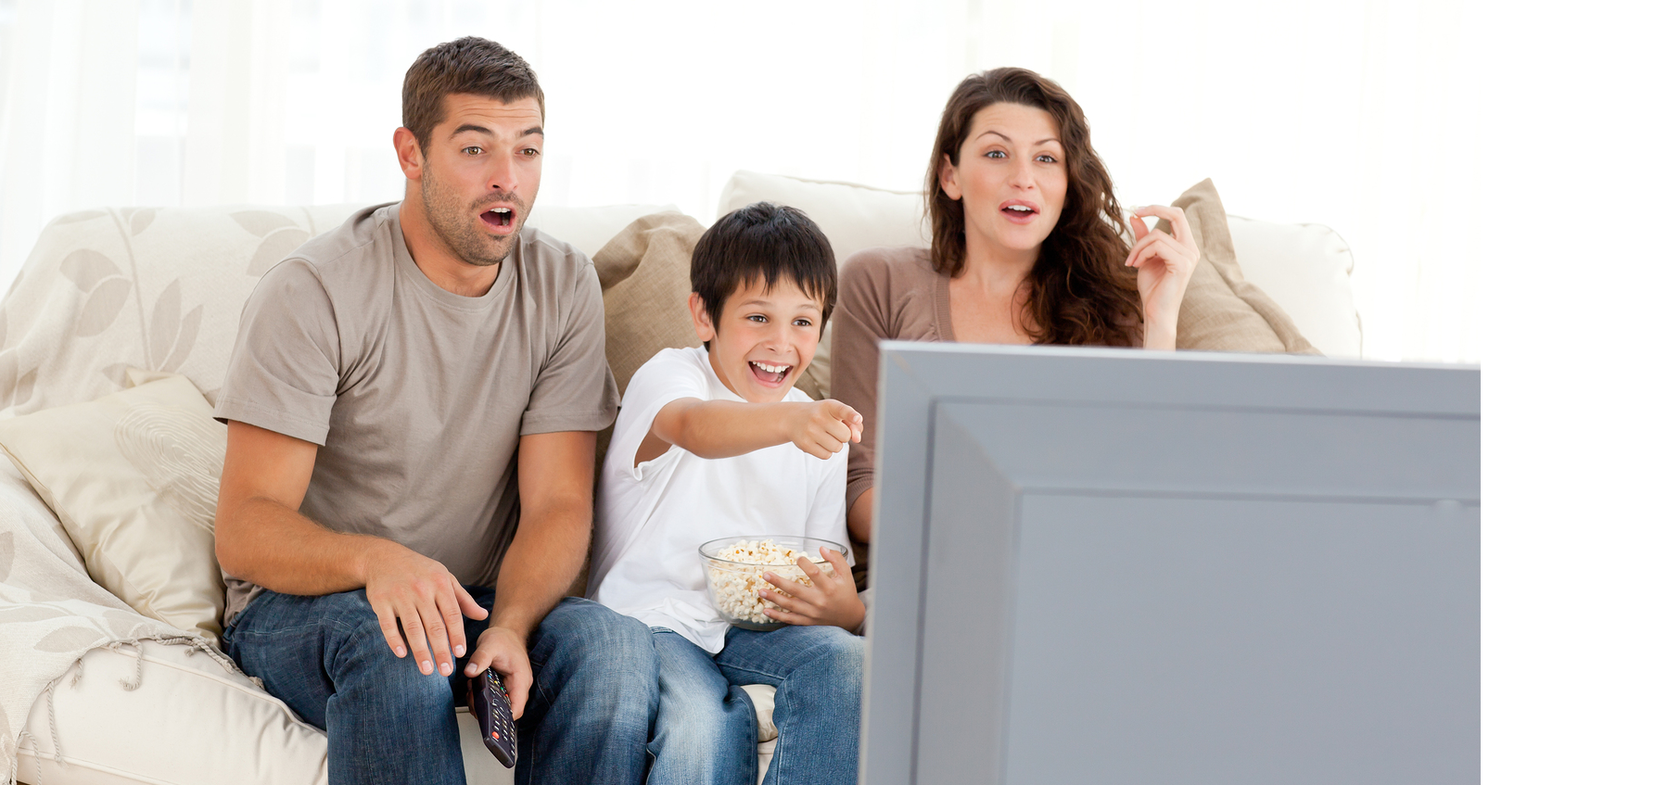 Мама друга на диване. Семья у телевизора. Семья на диване перед телевизором. Семья смотрит телевизор. Счастливая семья у телевизора.